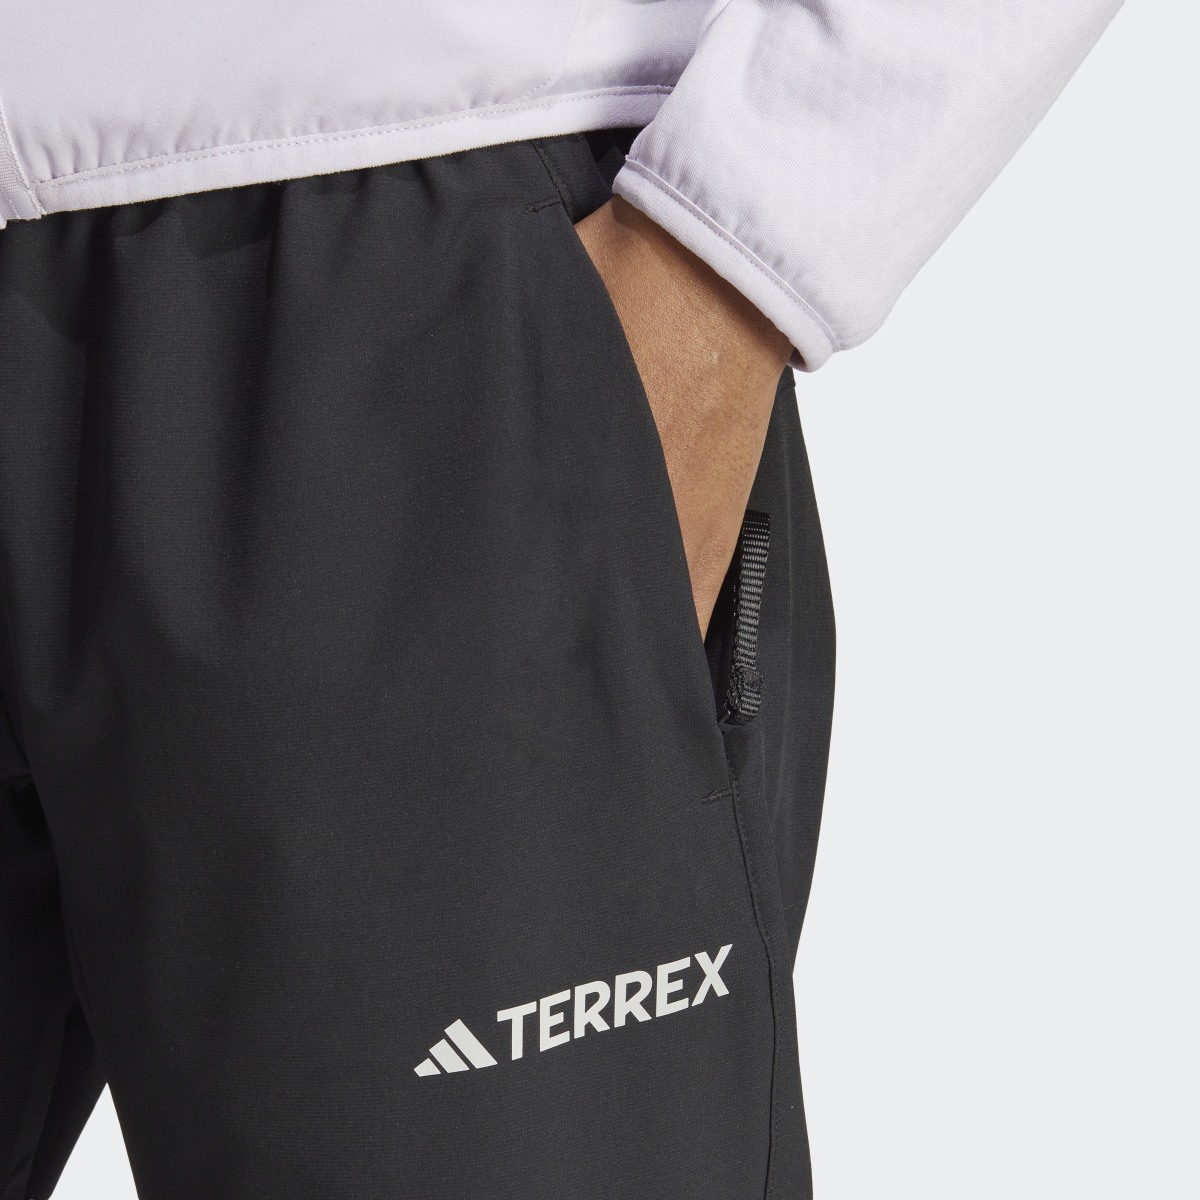 Adidas Terrex Liteflex Hiking Pants. 7